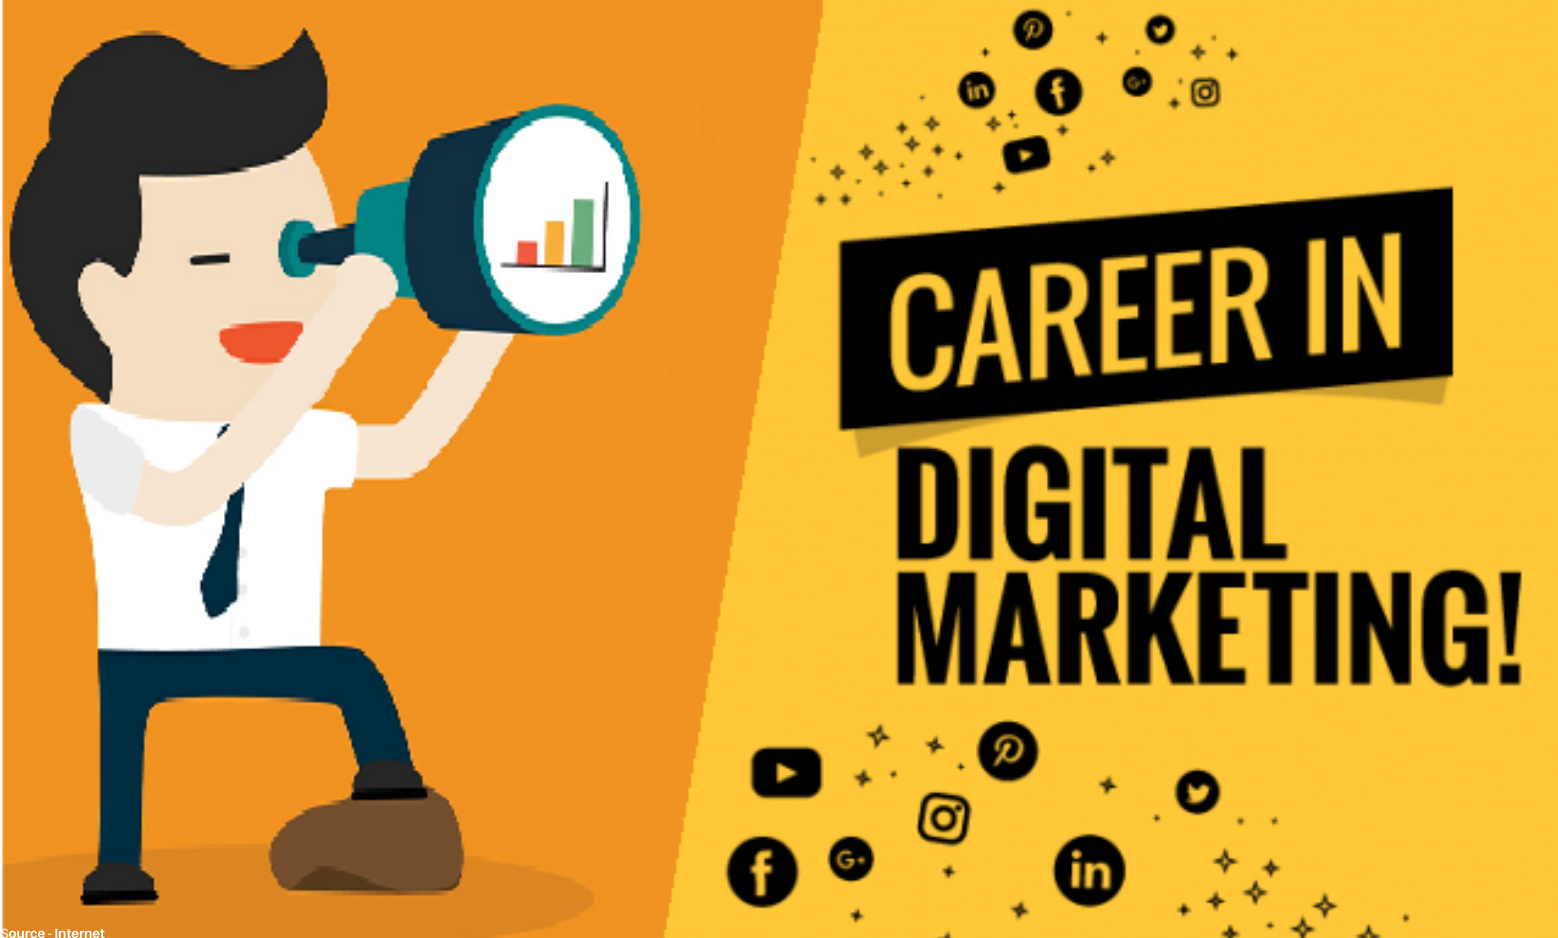 Digital Marketing as a career